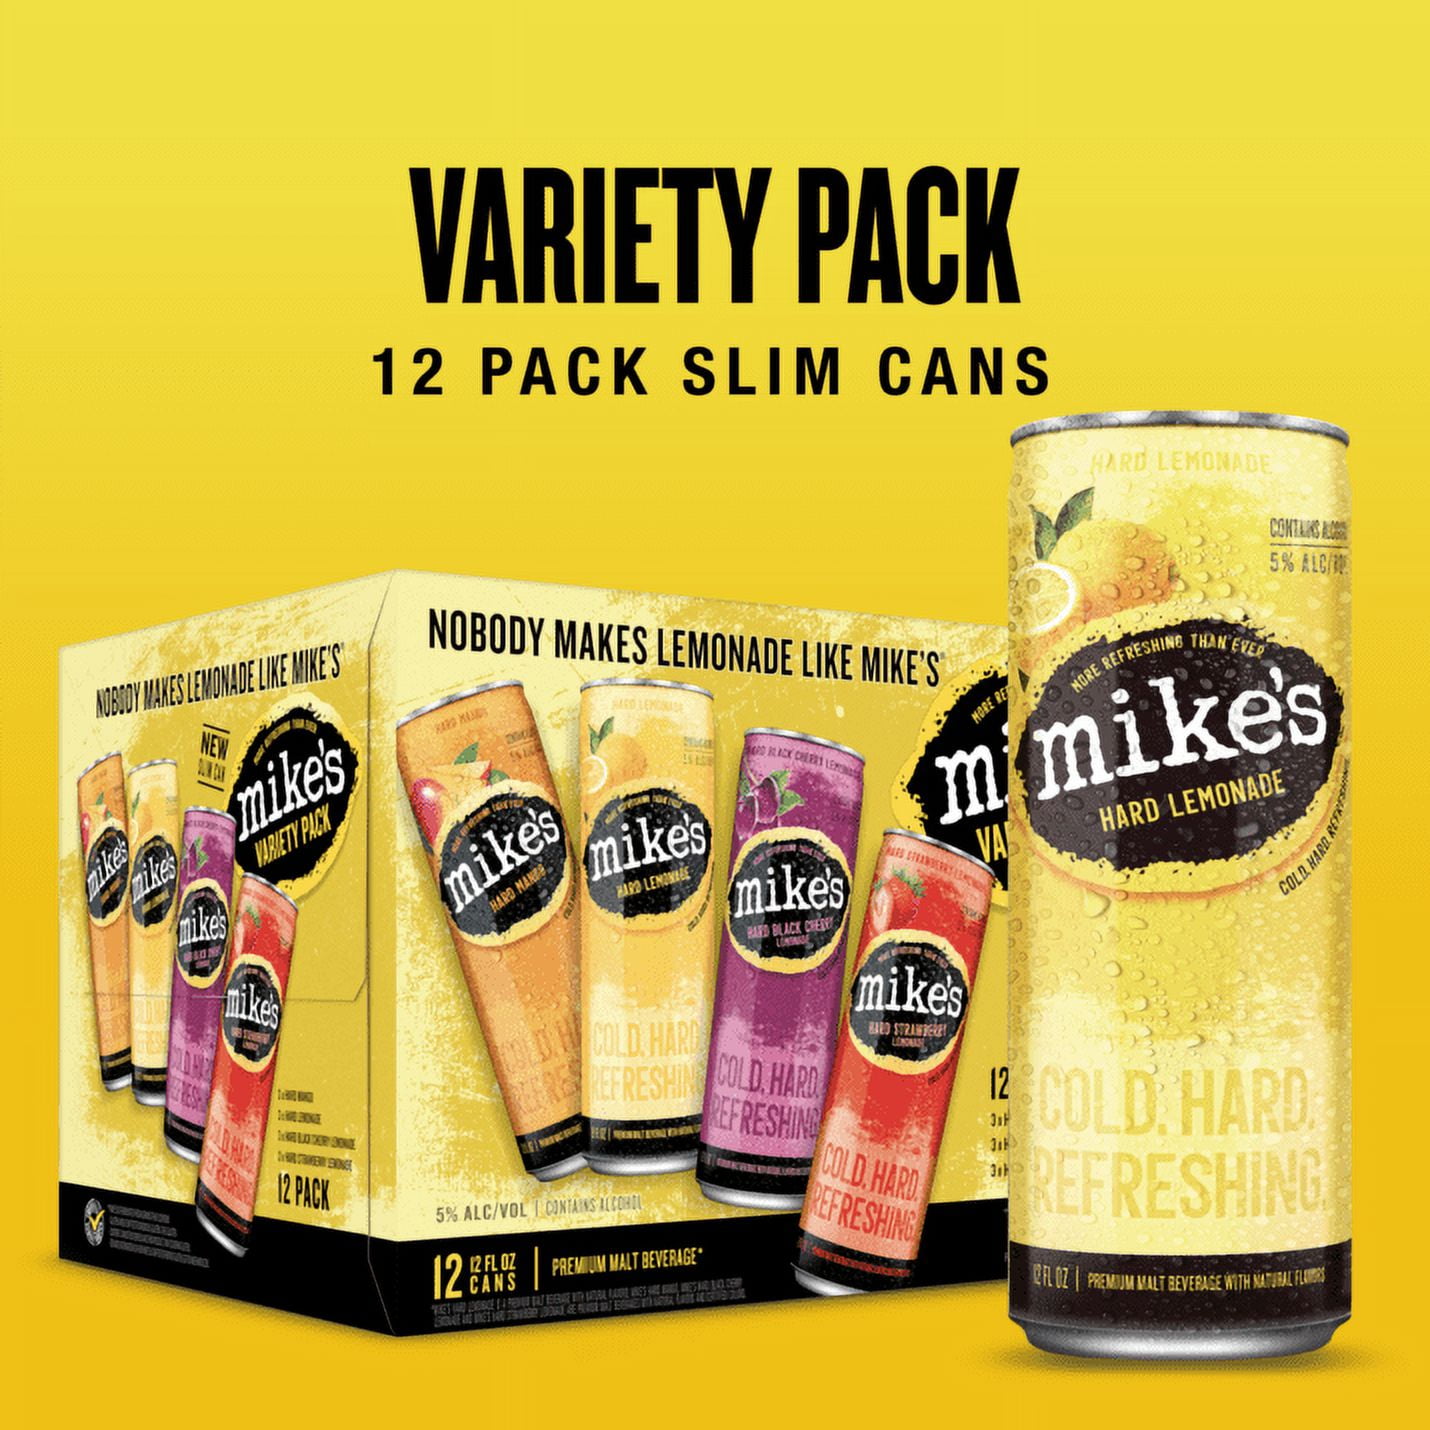 mike-s-hard-lemonade-variety-pack-12-pack-12-fl-oz-cans-5-abv